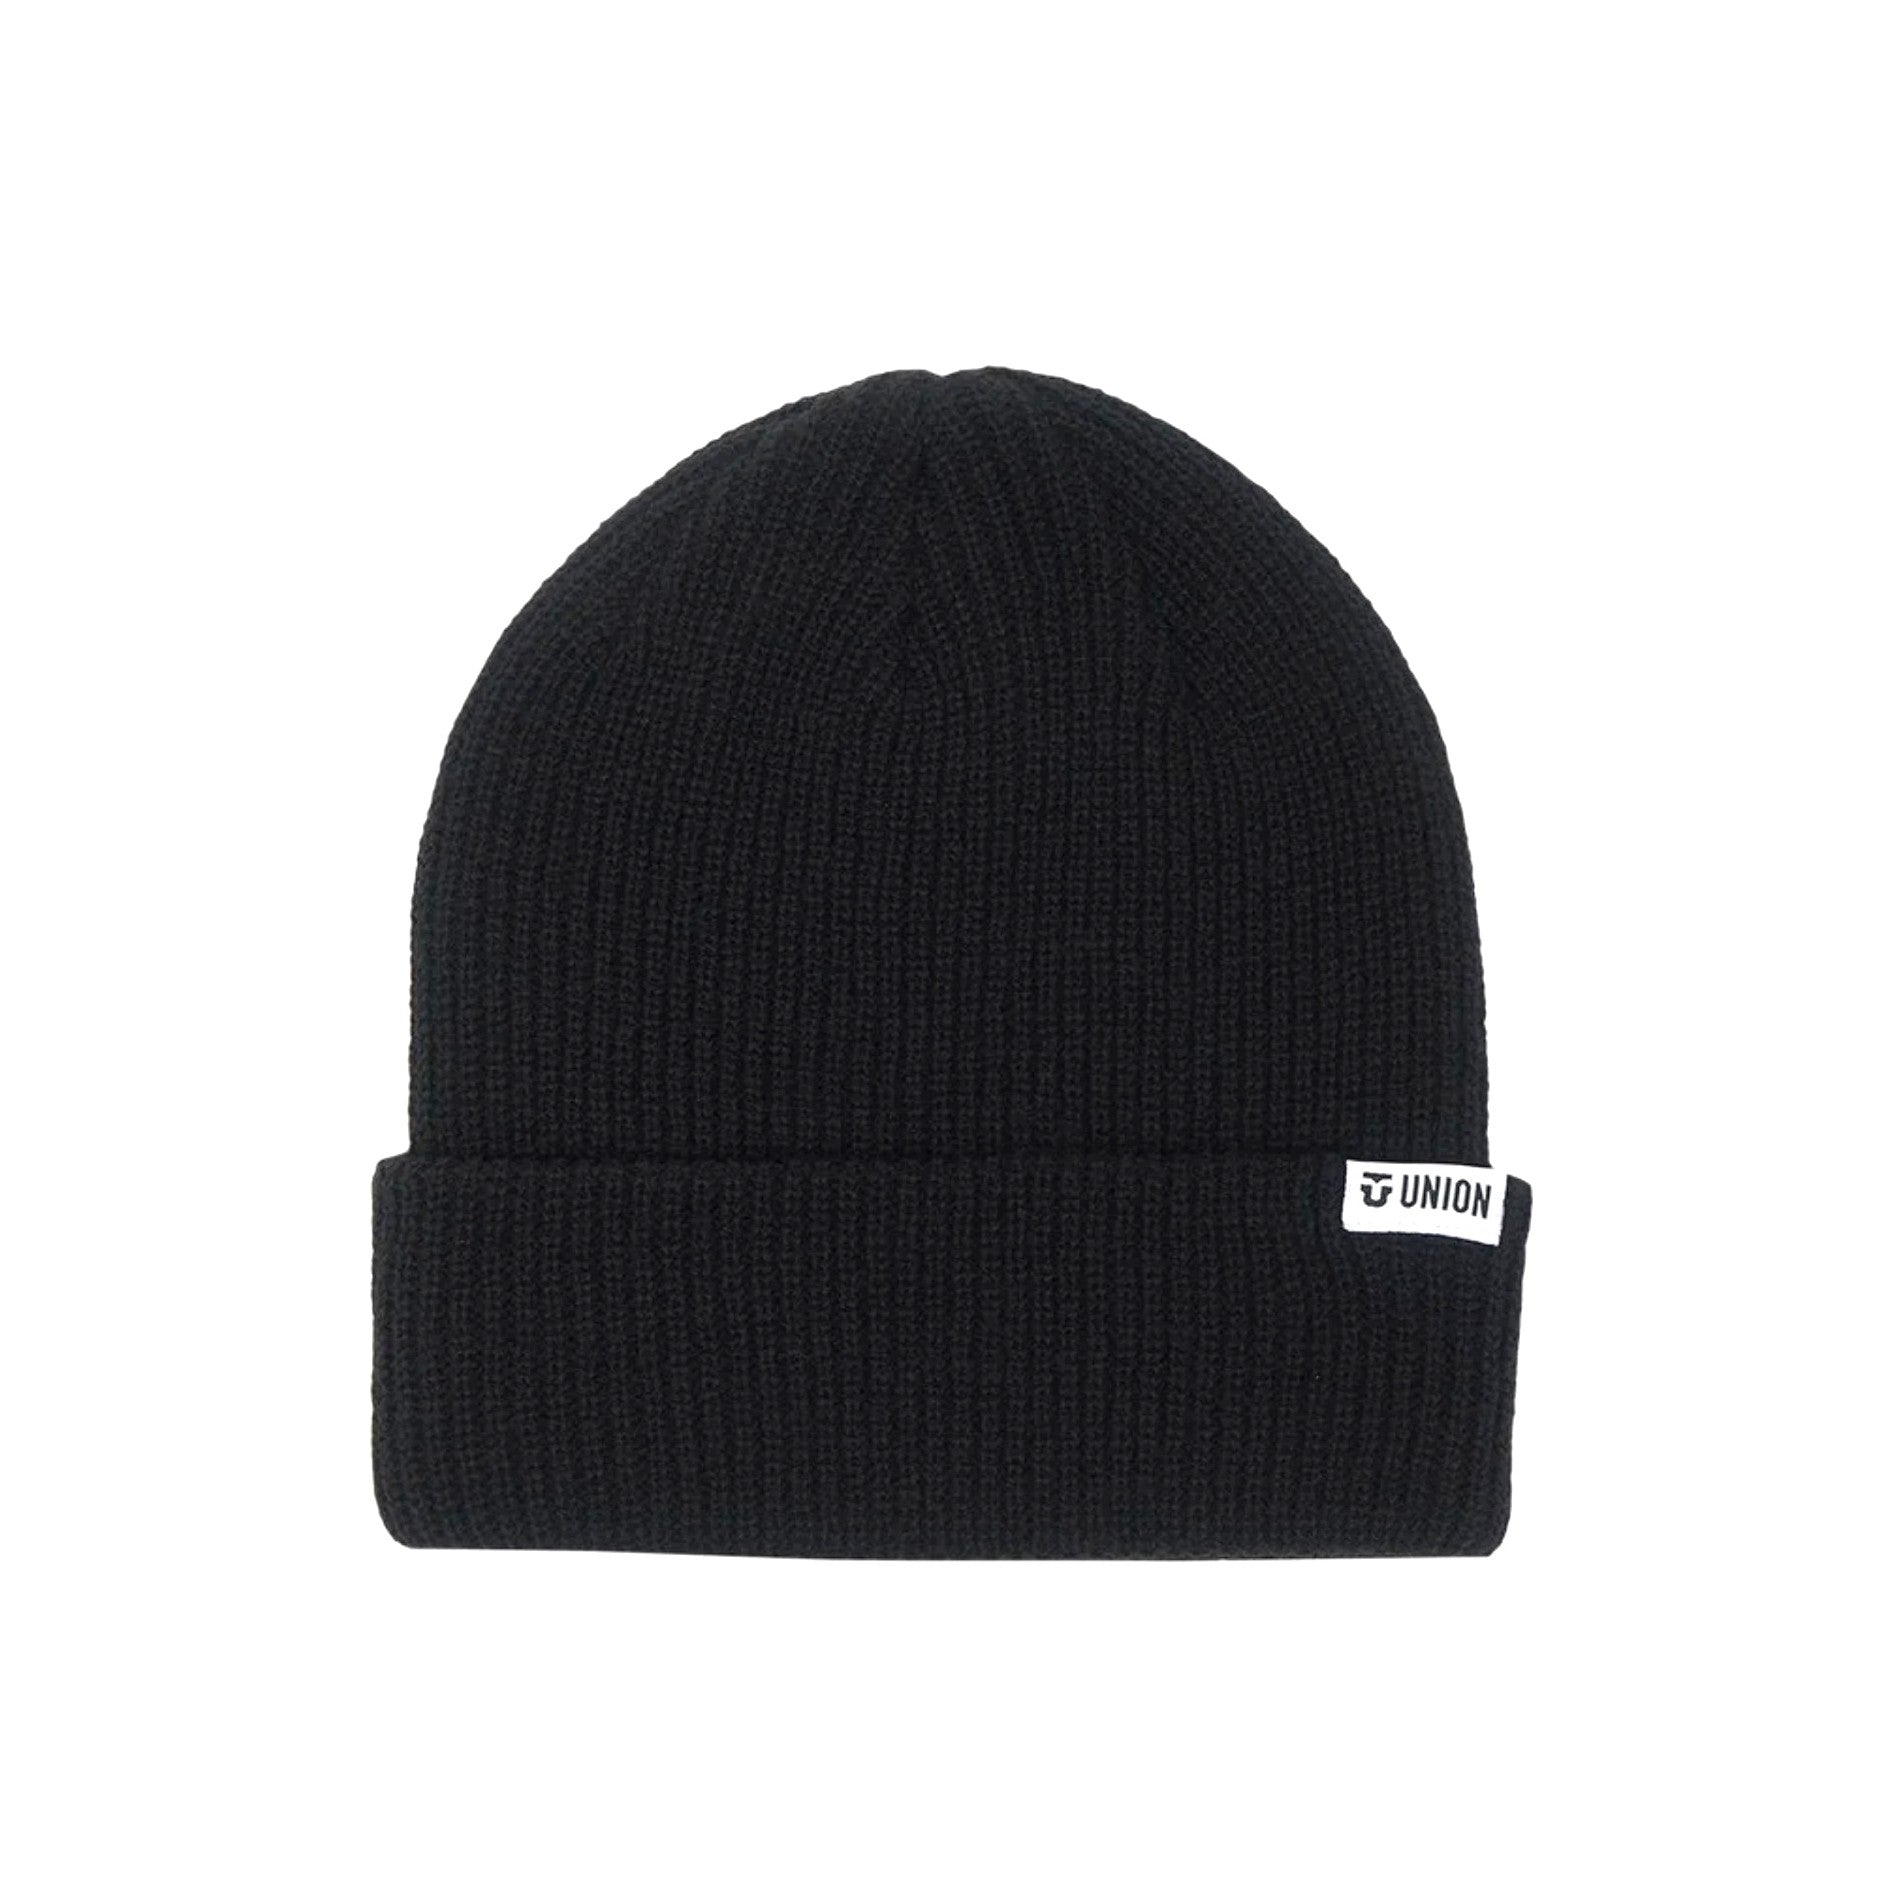 UNION BINDING CO. - Low Cuff Beanie Hat - Black